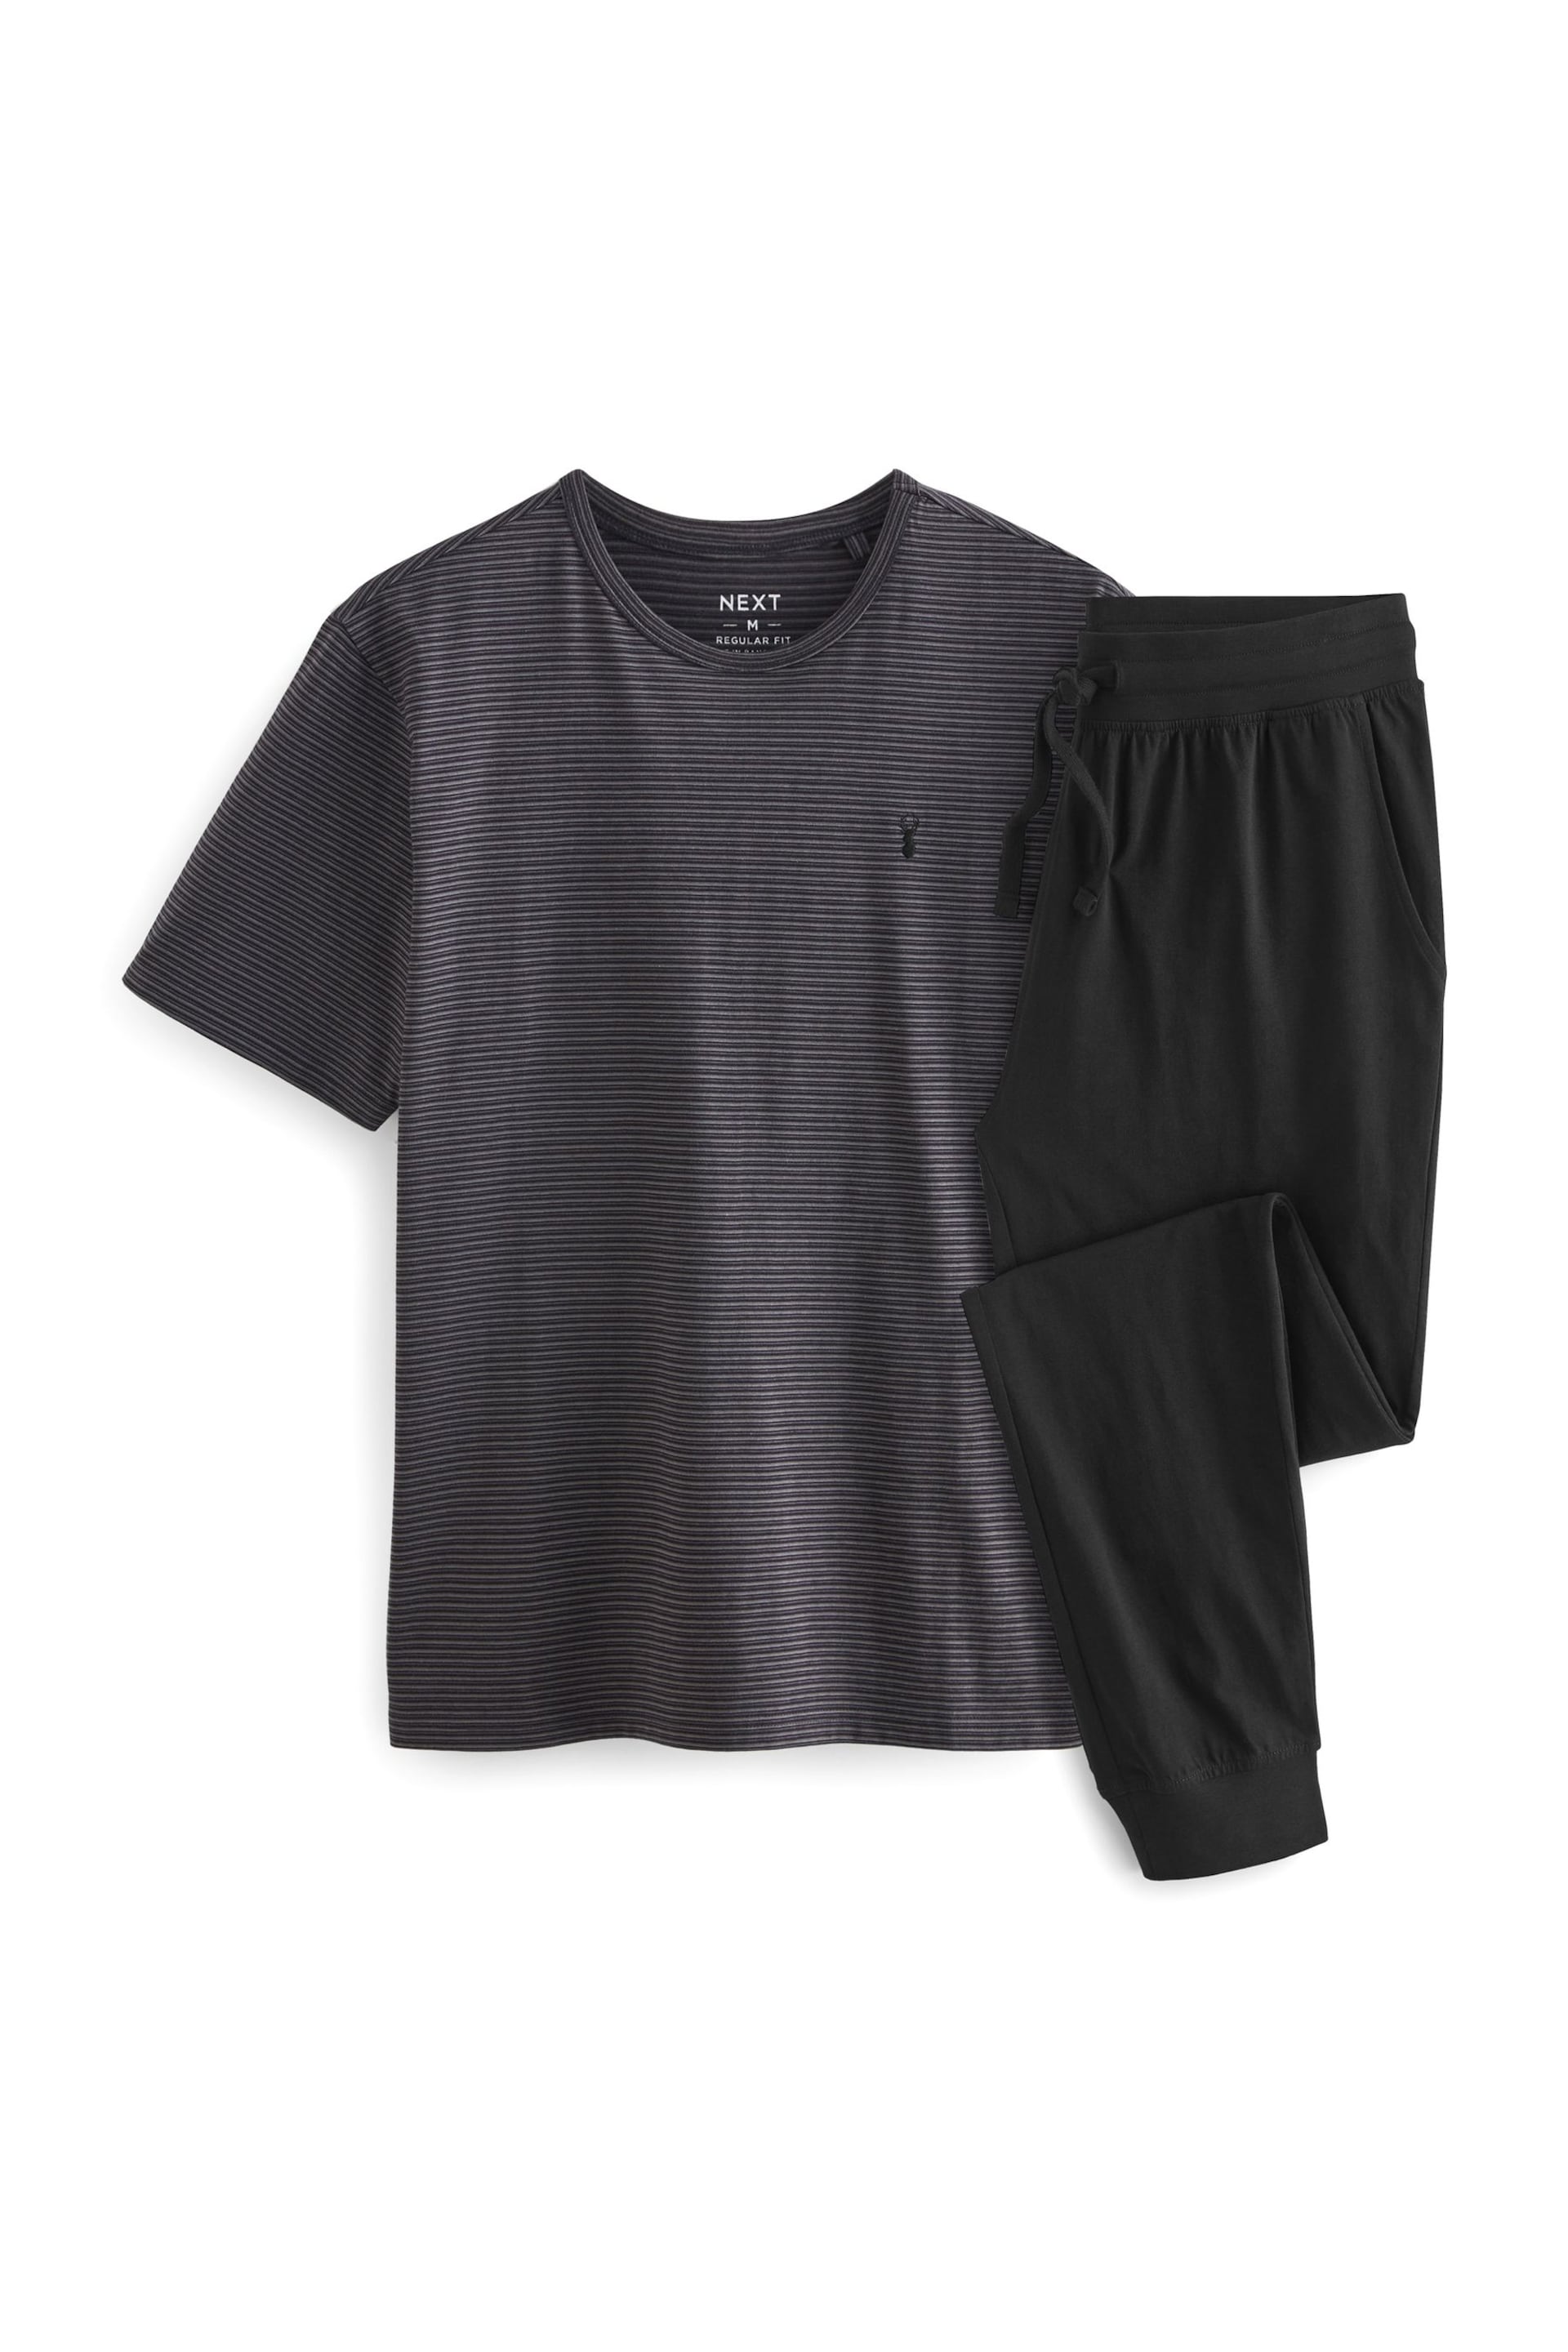 Grey/Black Fine Stripe Cuffed Jersey Pyjamas Set - Image 12 of 16